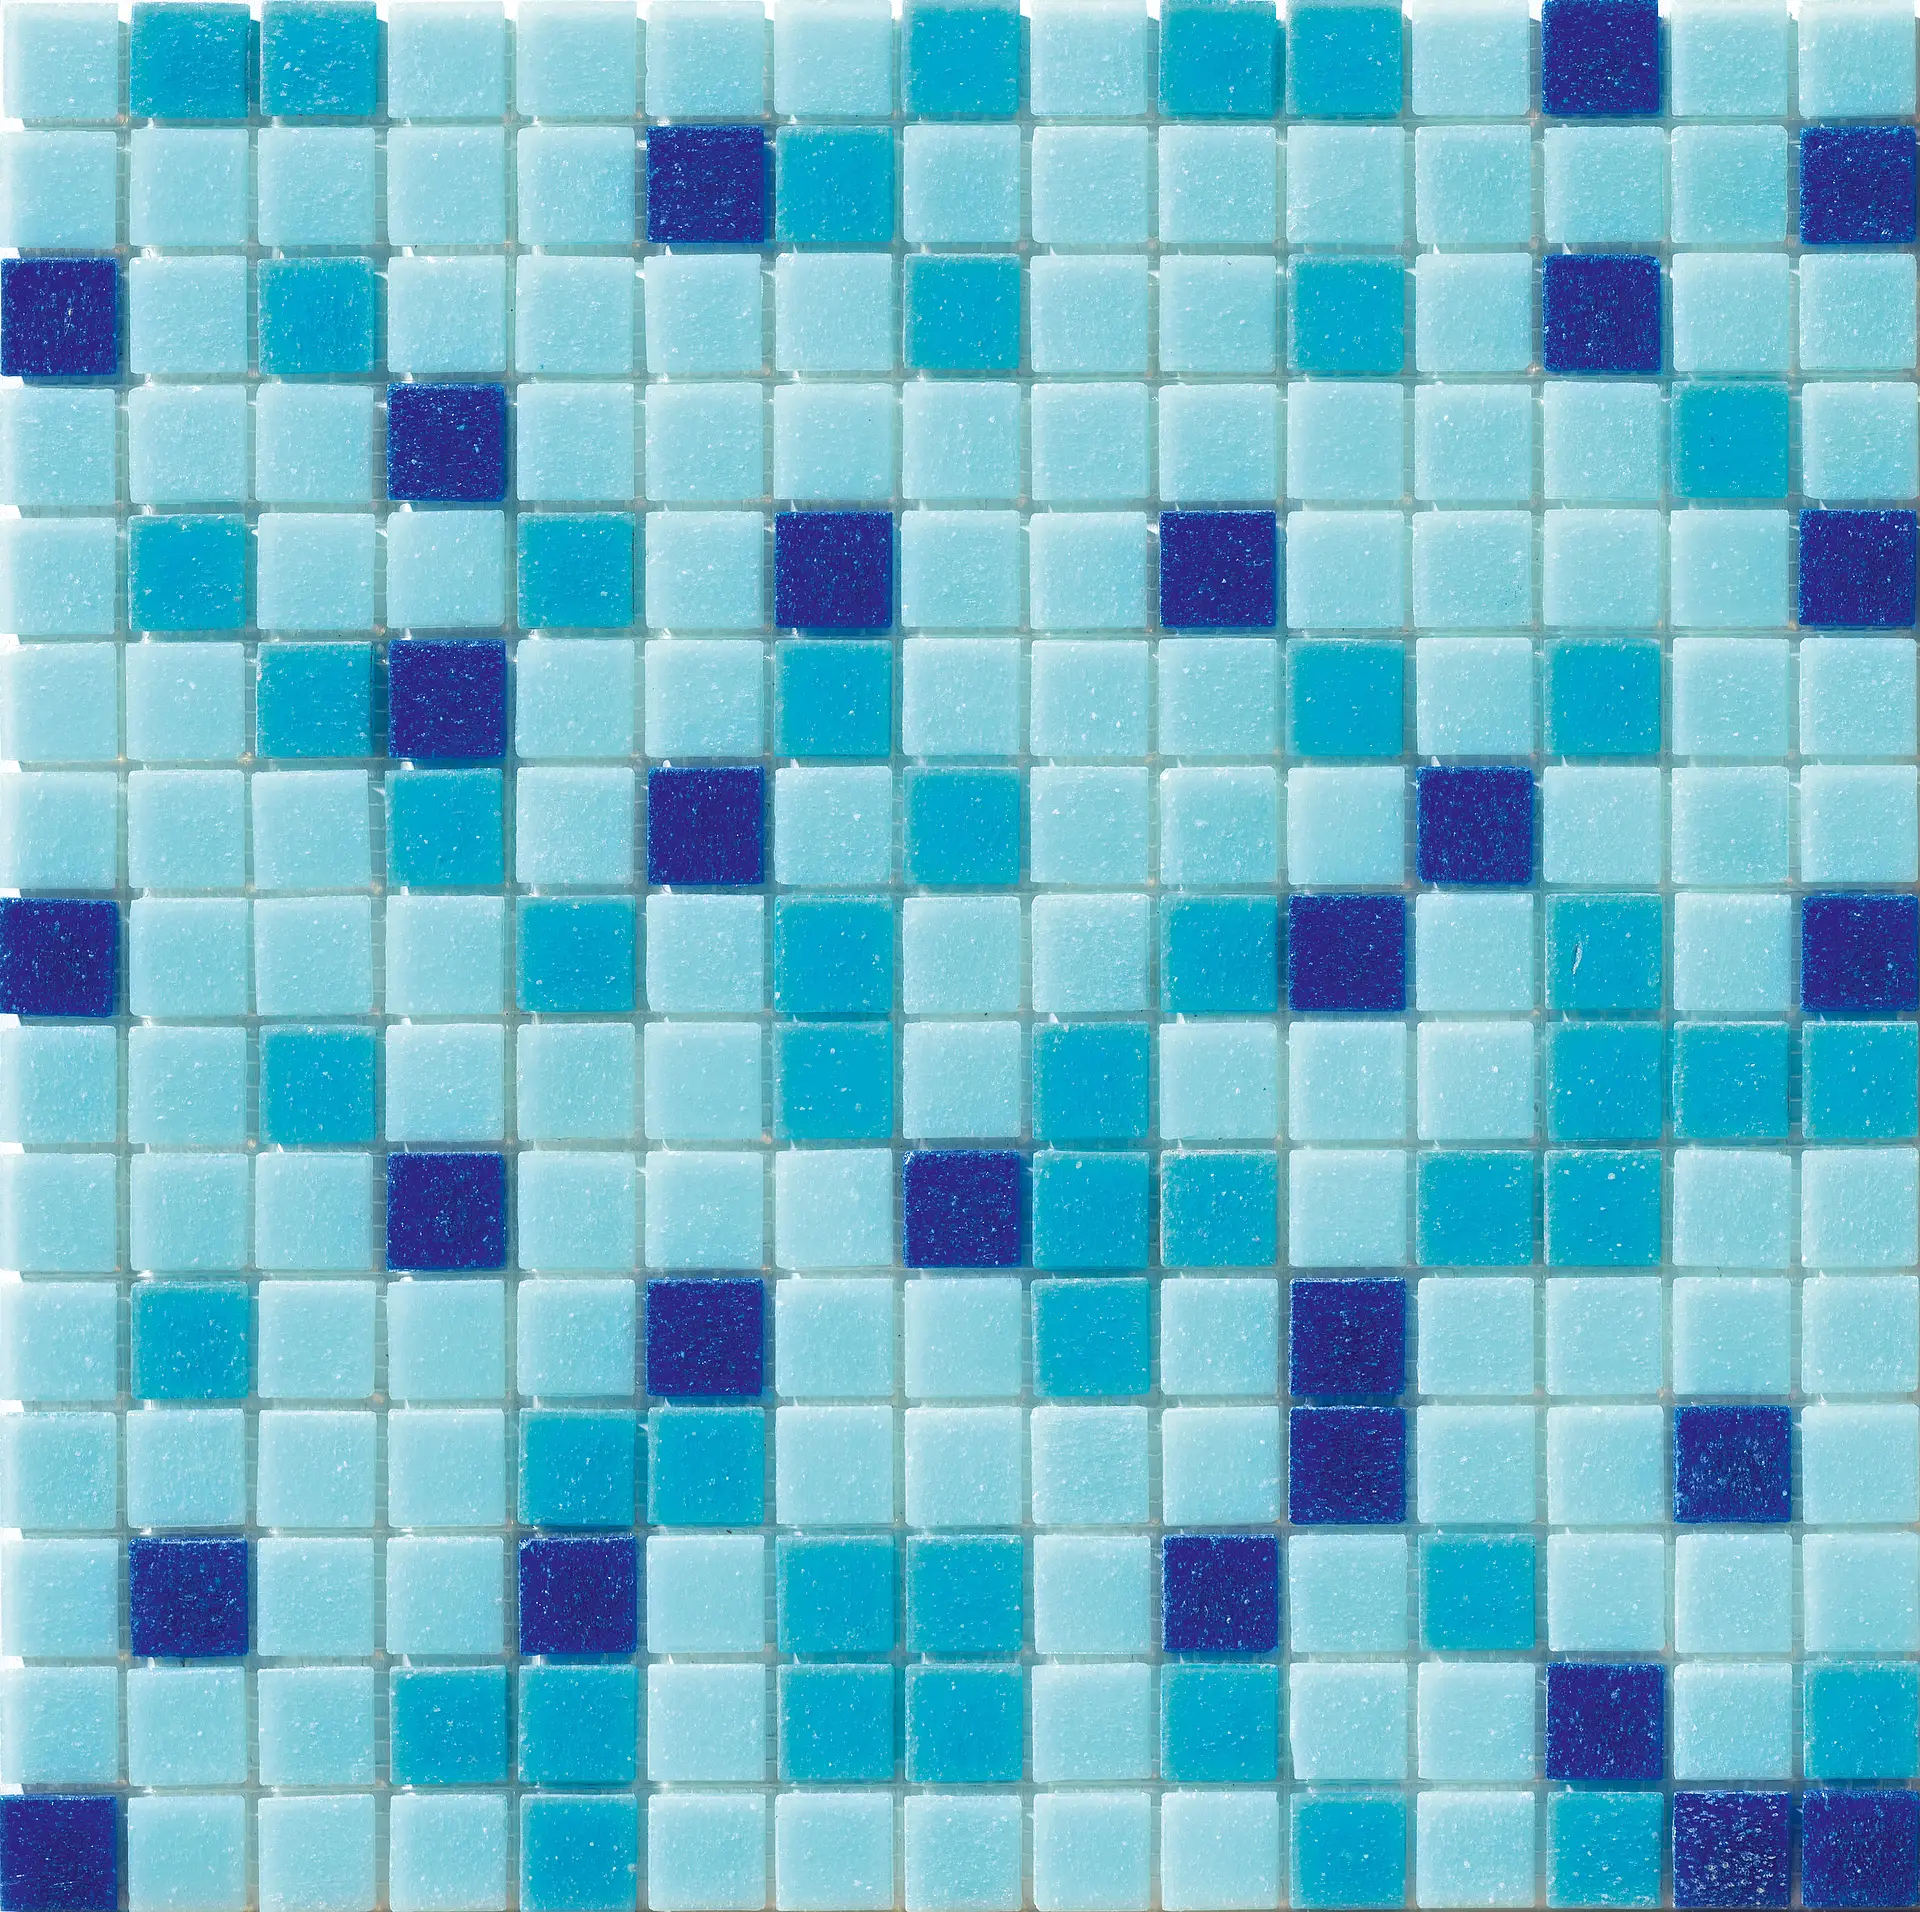 Мозаичный квадрат. Мозаика. Aqua-300 32,7*32,7 (Gilia) бумага. Aqua Mosaic Аква мозаика. Керамическая мозаика Аква 200. Мозаика синяя.